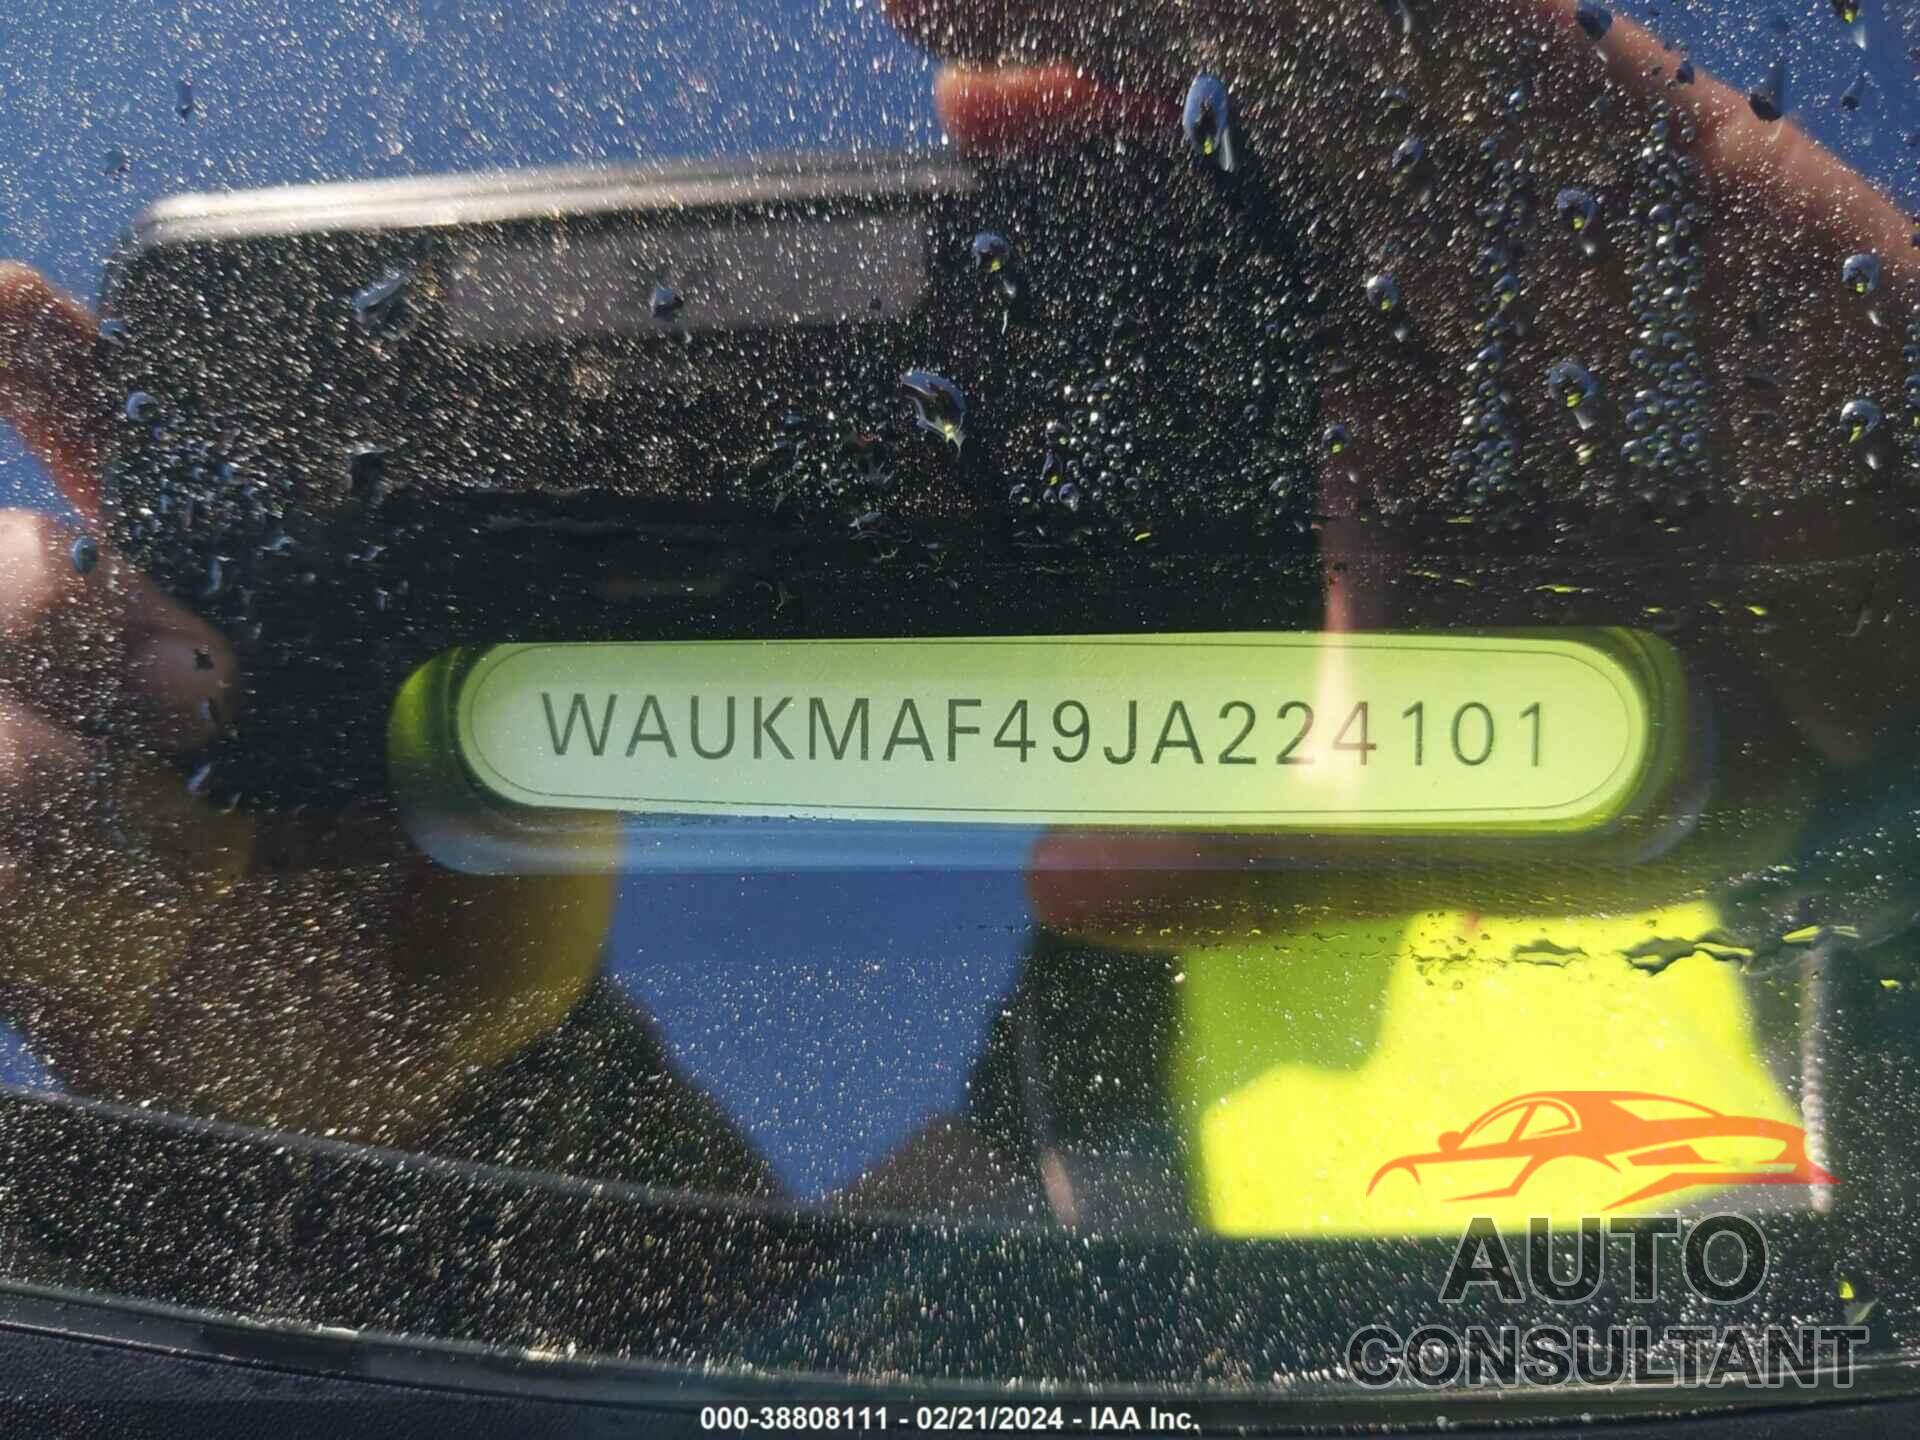 AUDI A4 2018 - WAUKMAF49JA224101